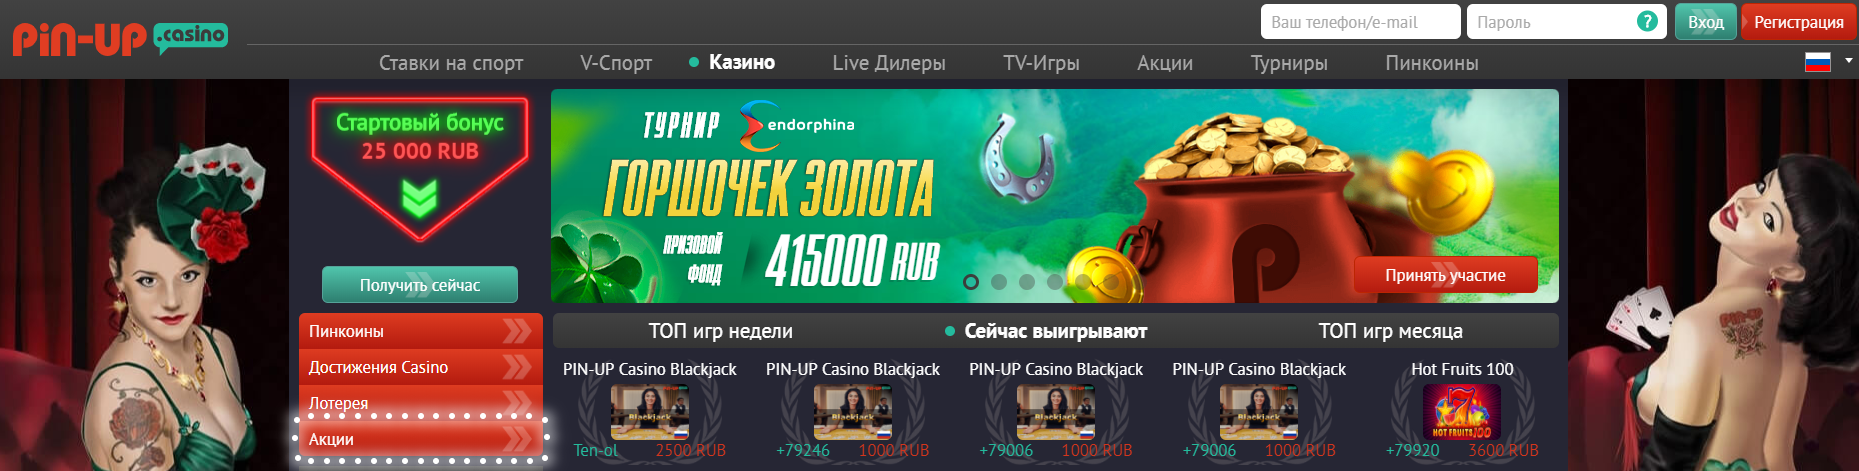 pin up сайт официальный казино twist casino